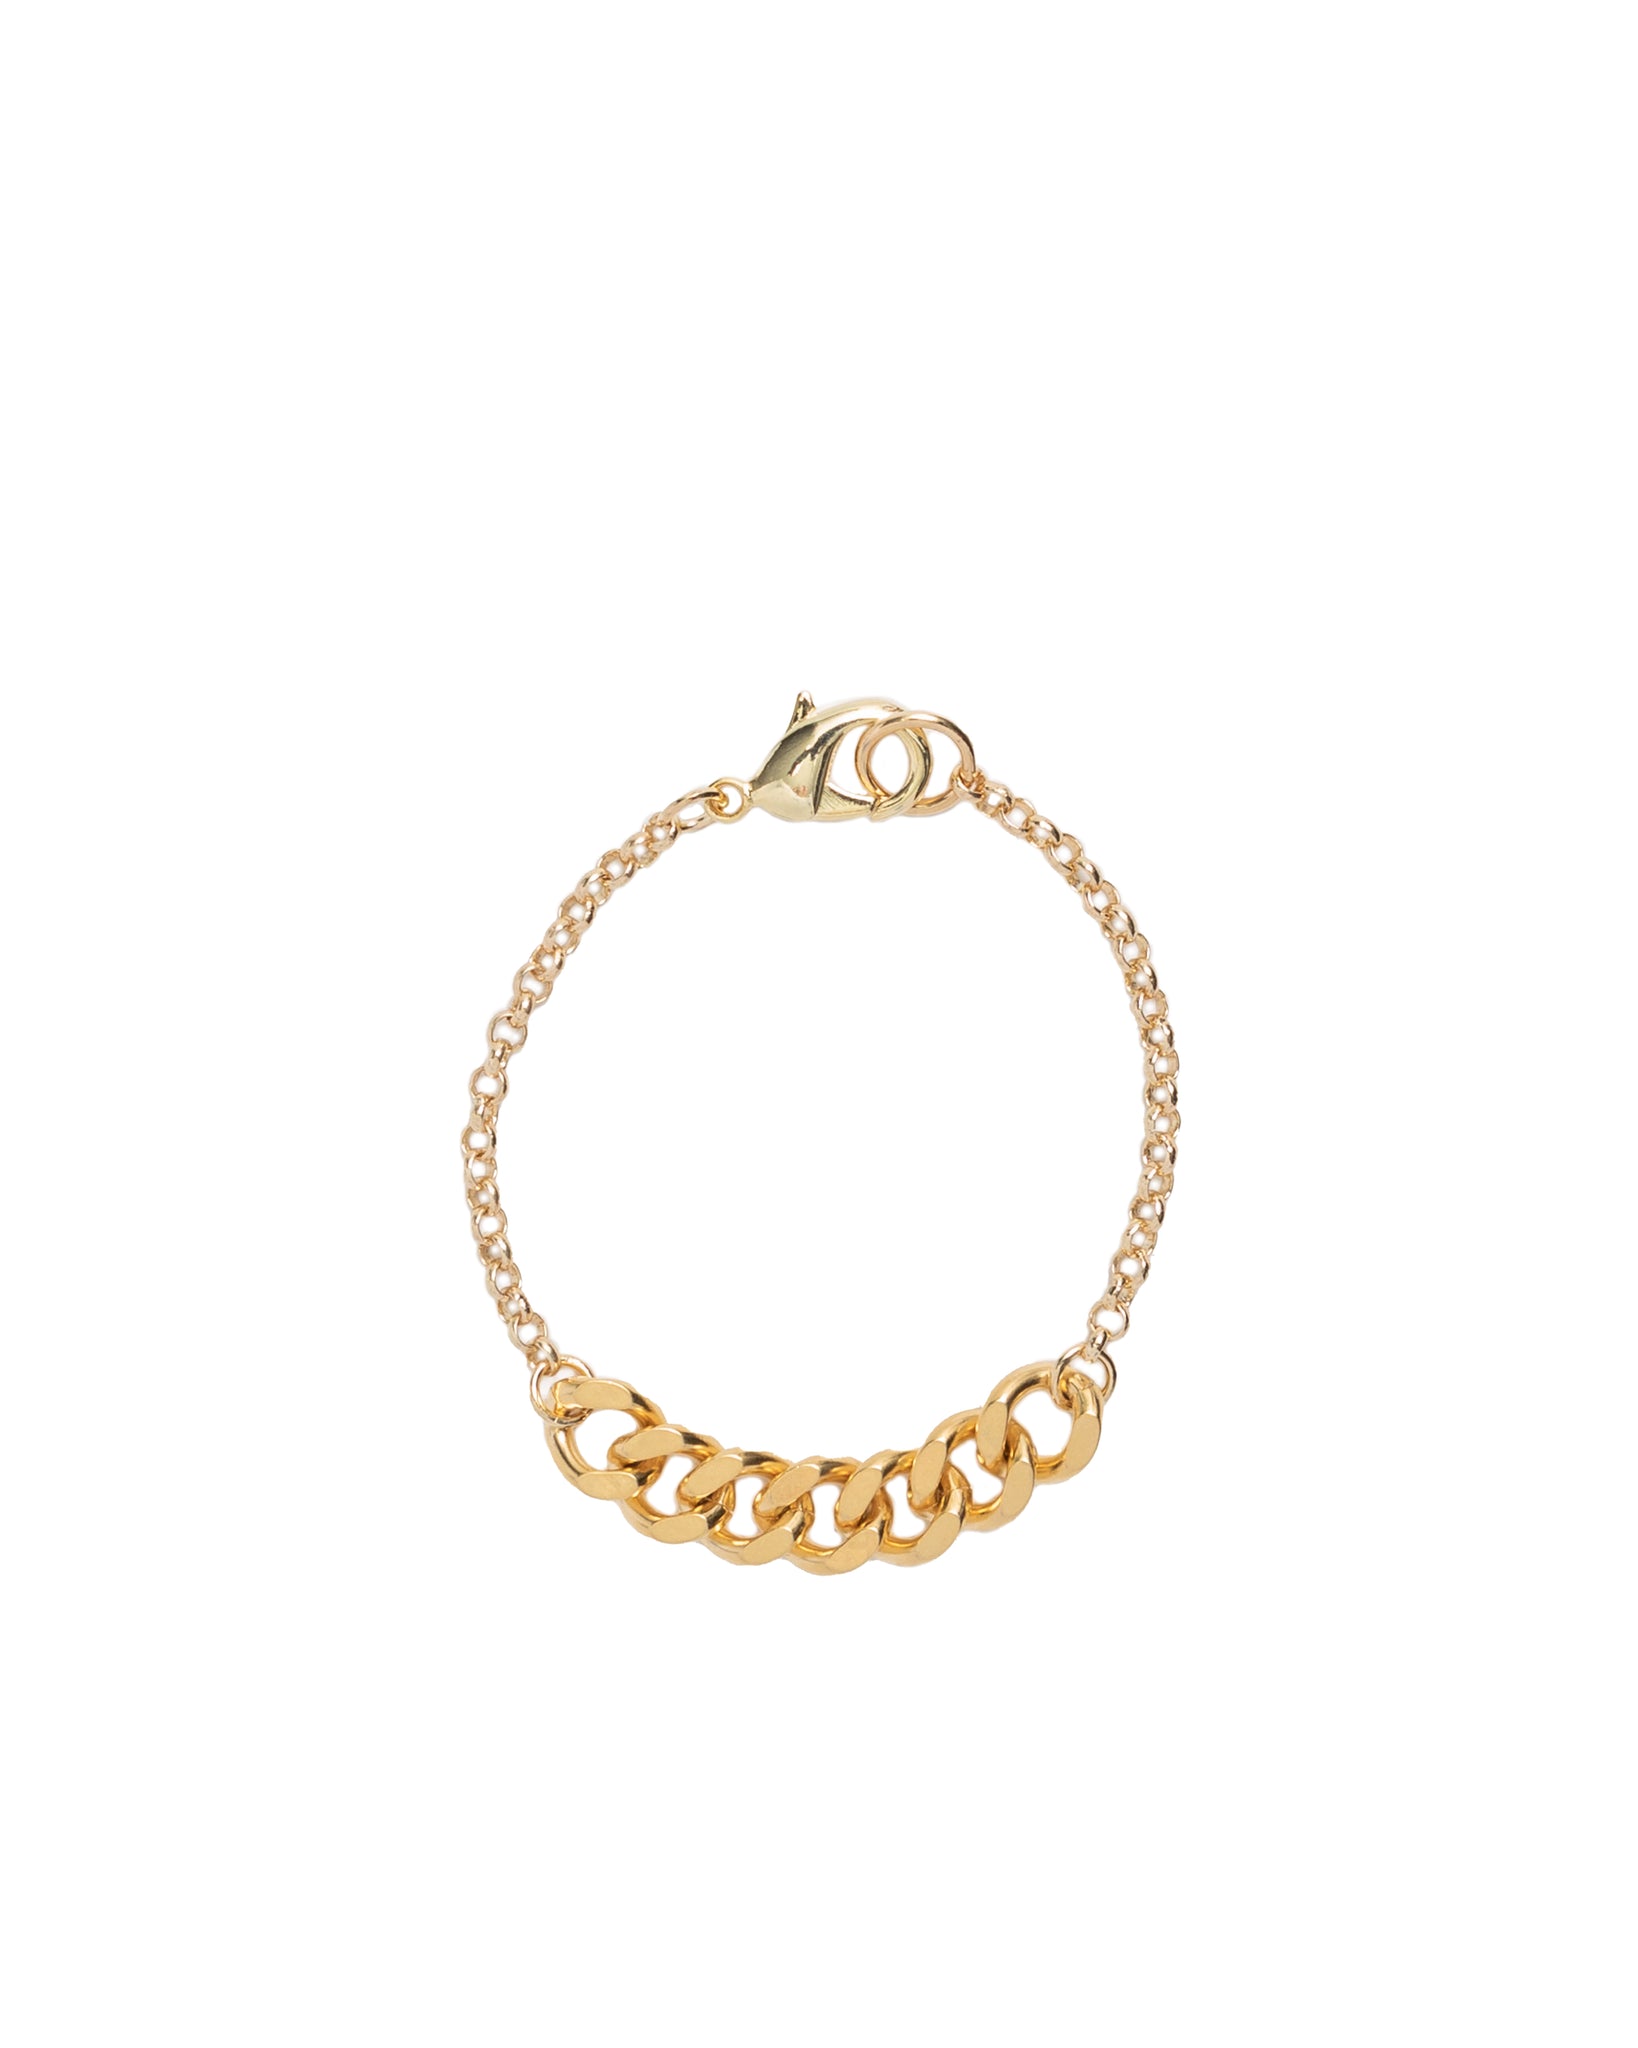 Gold Curb Chain + Rolo Chain Bracelet